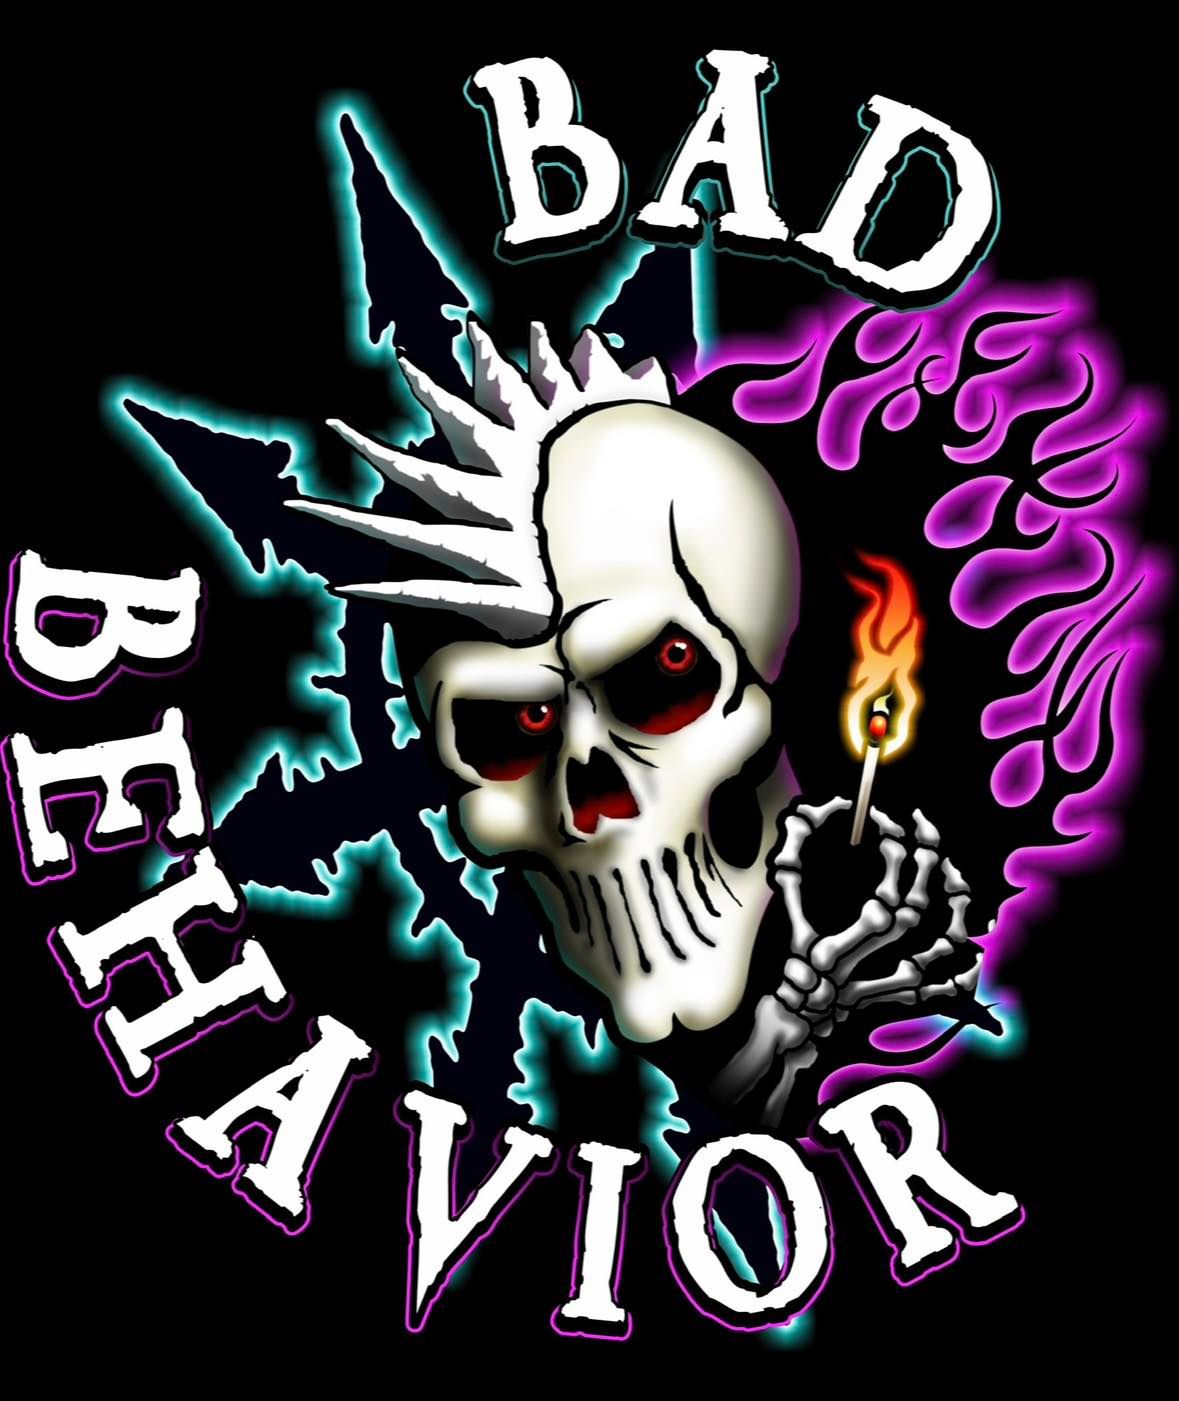  Bad Behavior Rocks the House @ Maxx Bar!